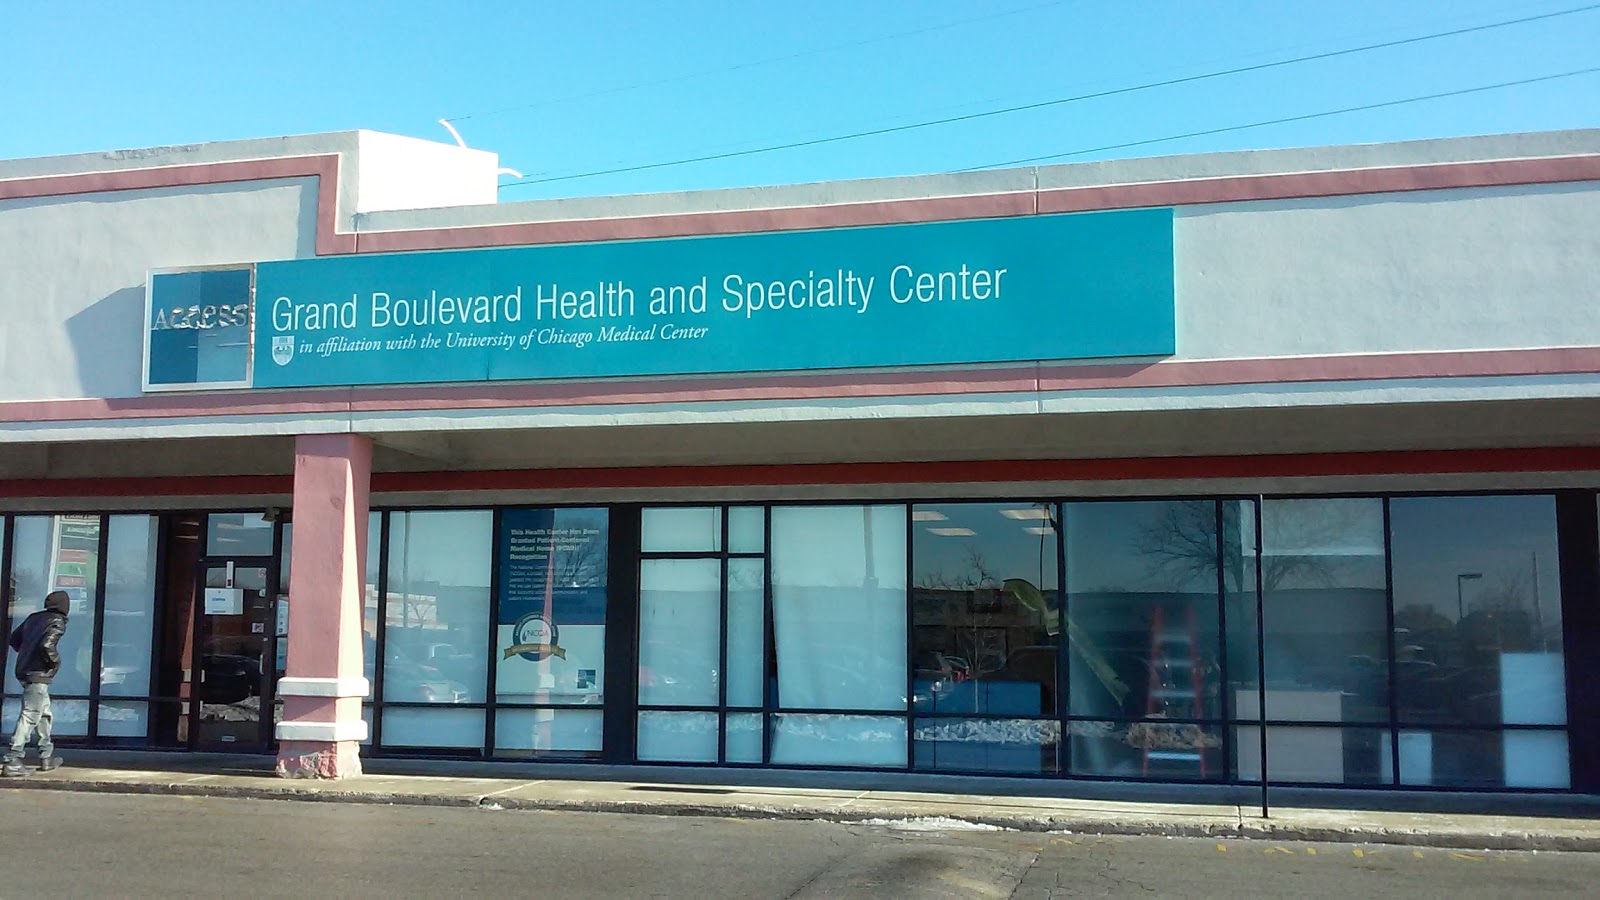 ACCESS Grand Boulevard Family Health - Specialty Center